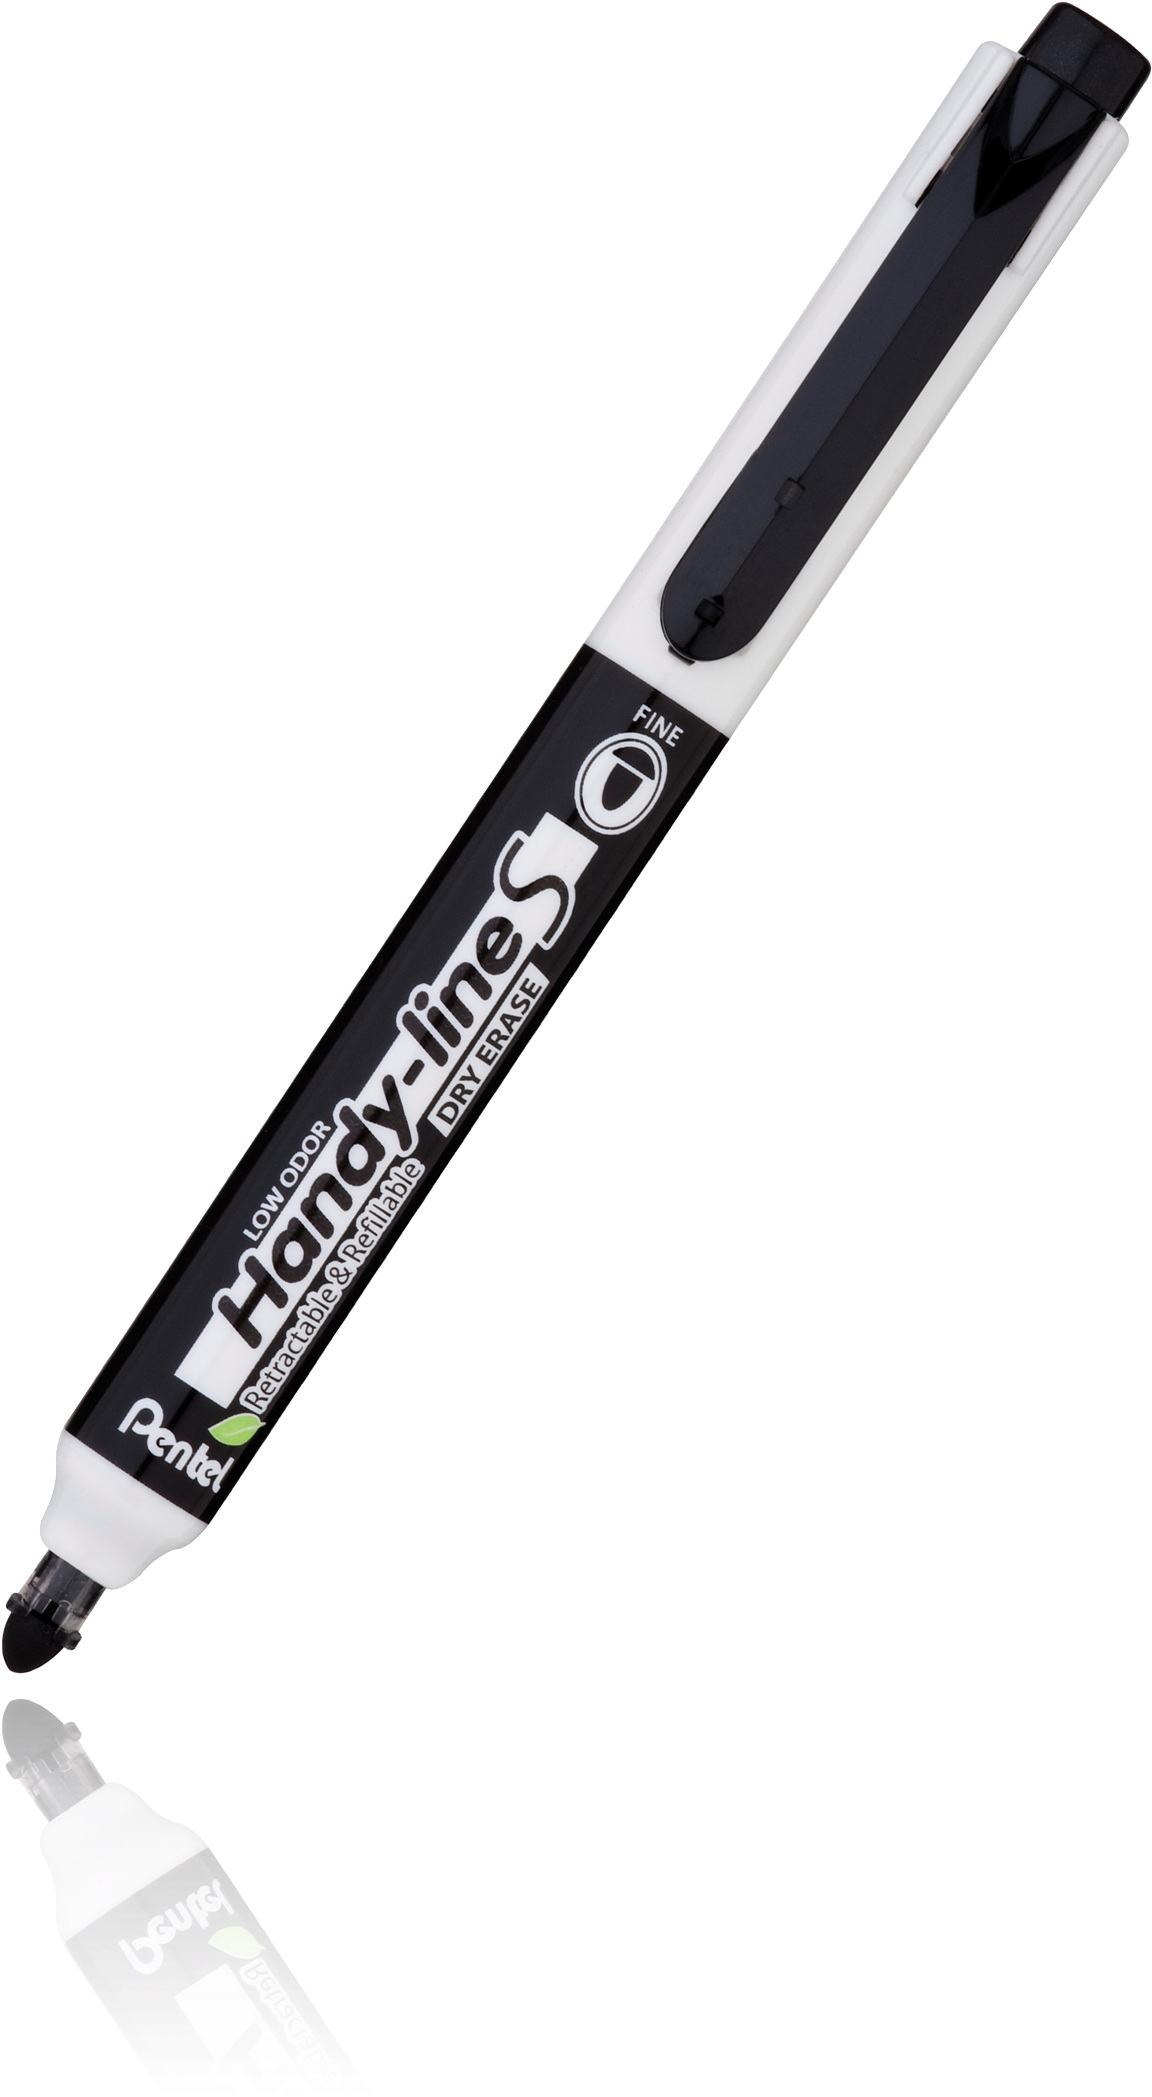 Handyline S Dry Erase Marker With Dry Eraser - .1 Mm Mechanical Pencil (1919x2560)